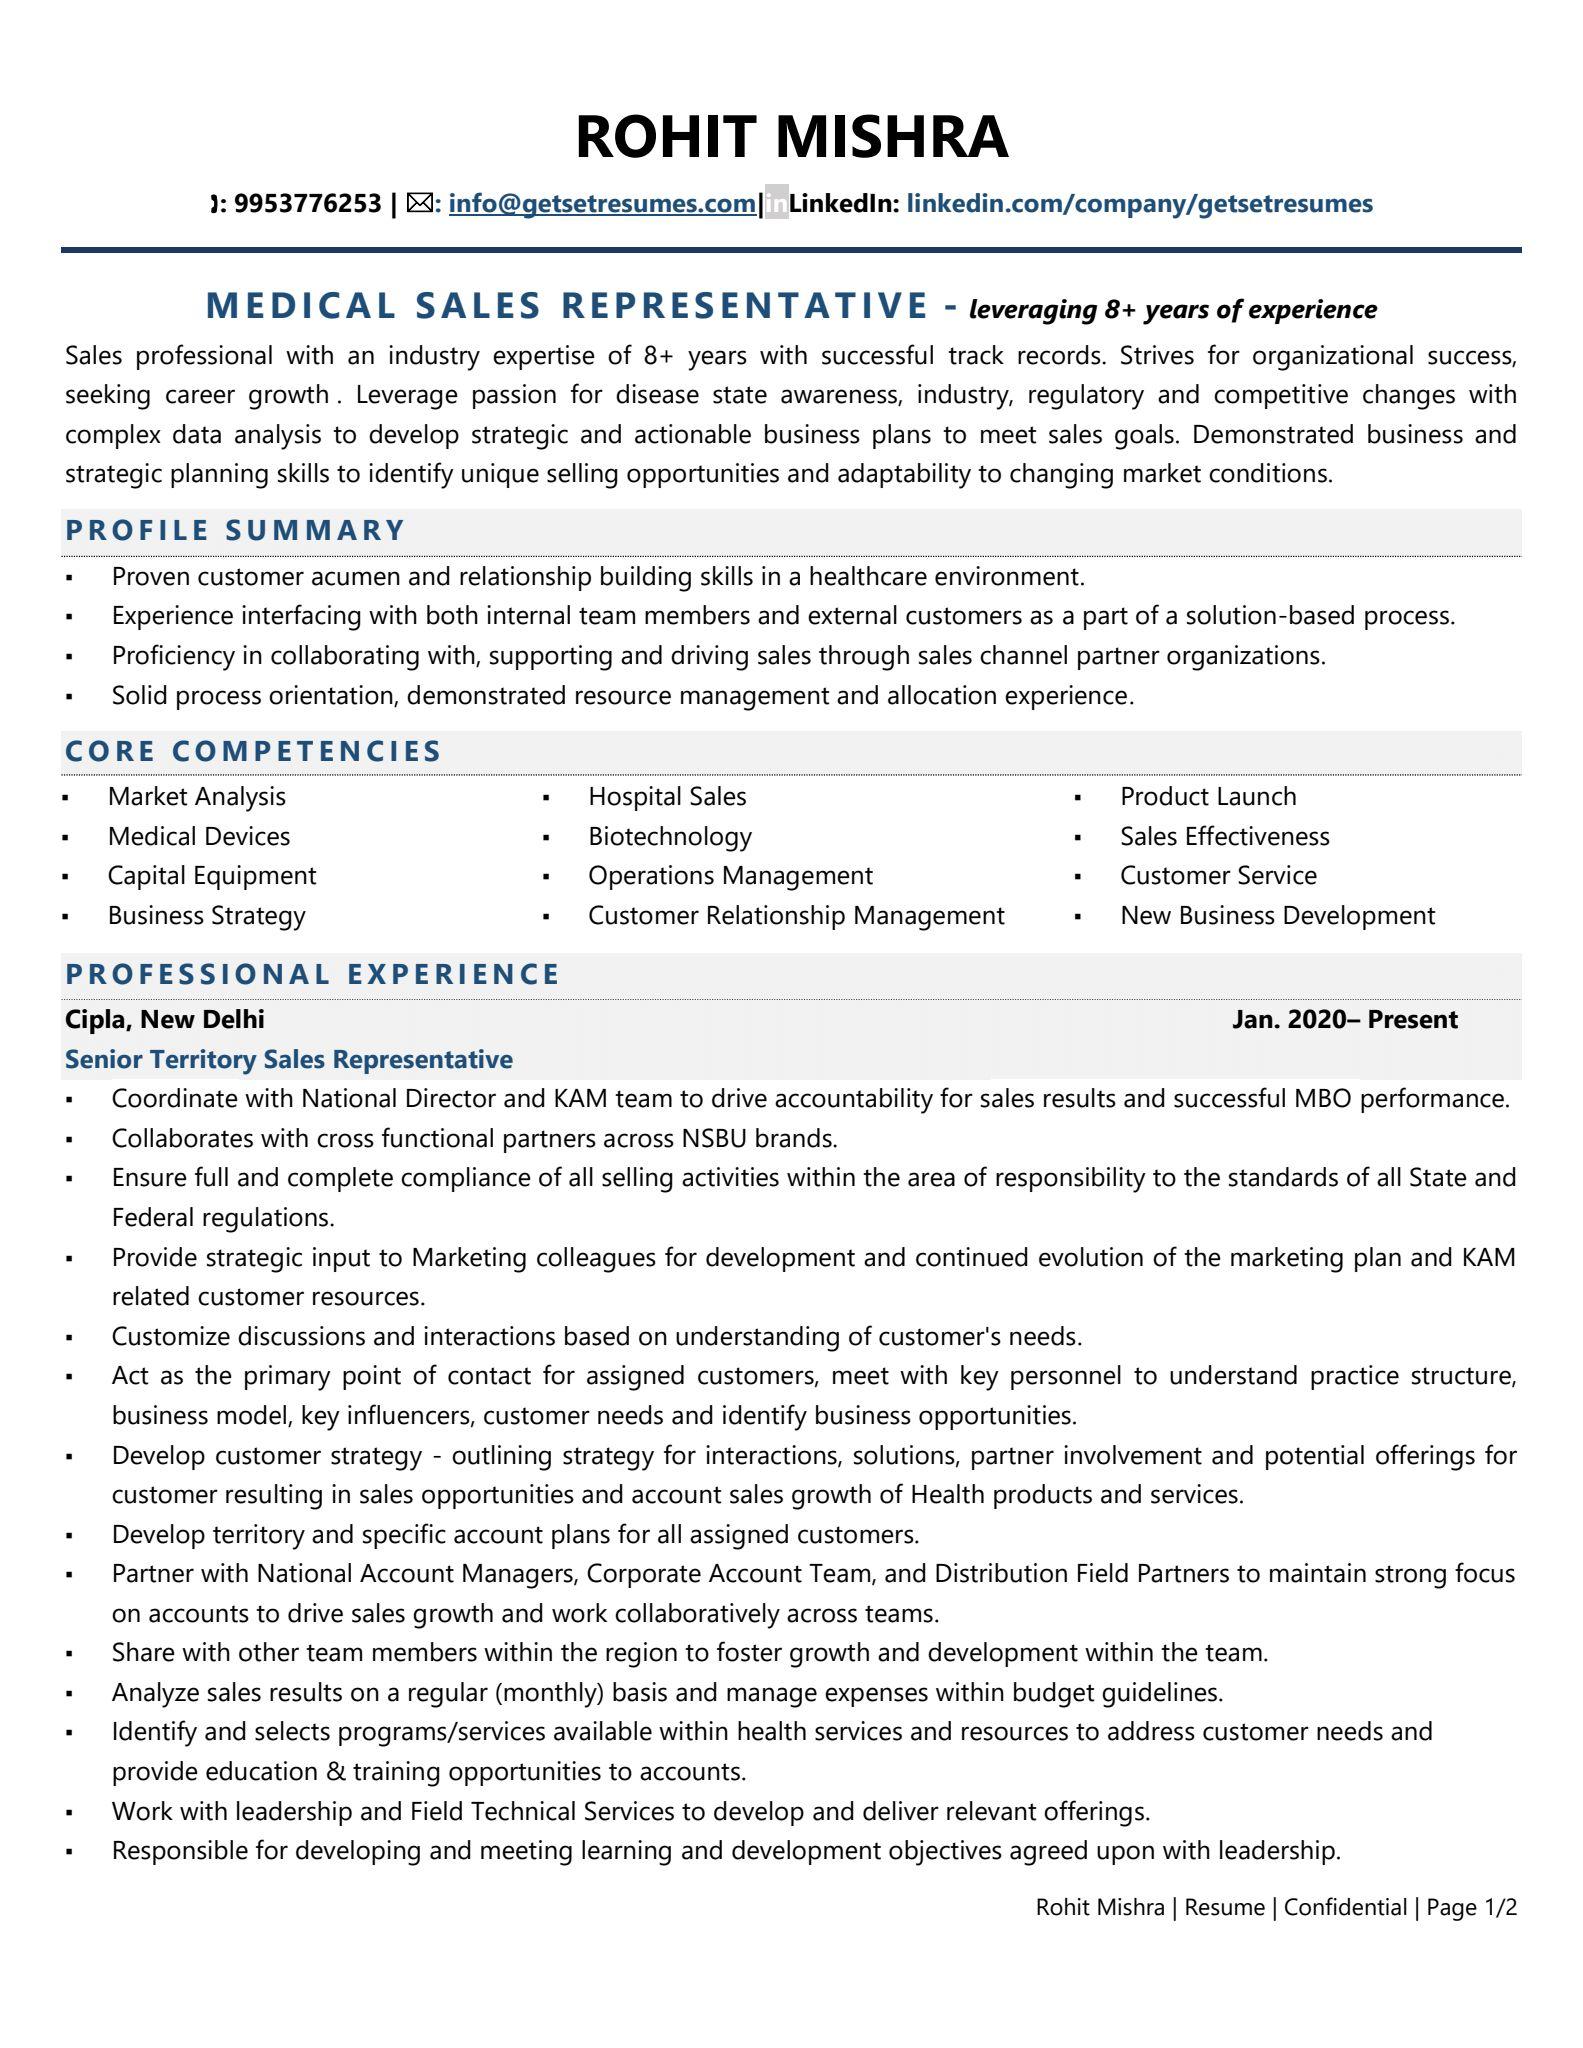 Medical Sales Representative - Resume Example & Template